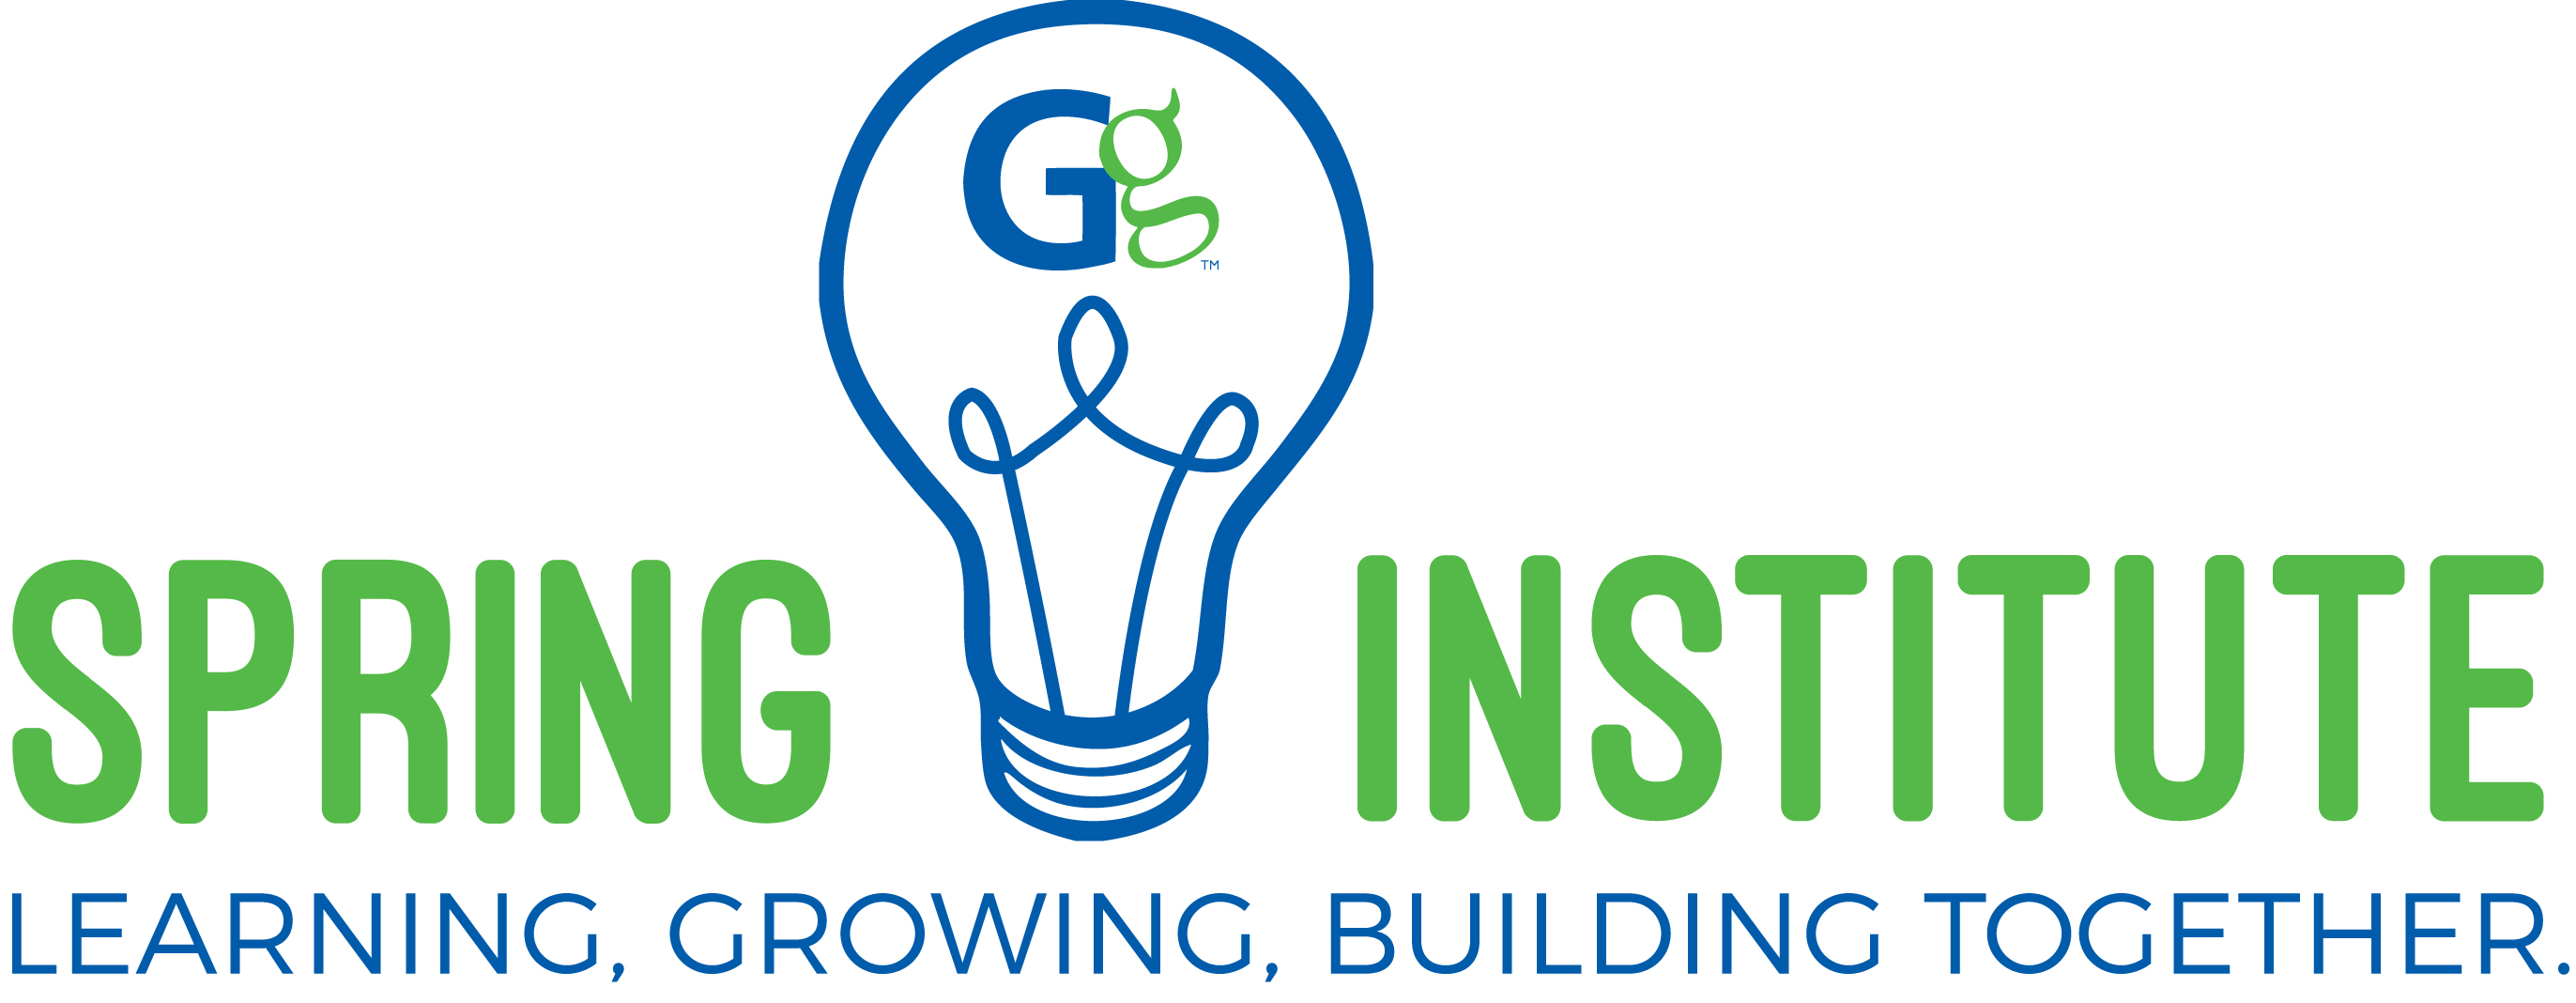 Gg Spring Institute logo